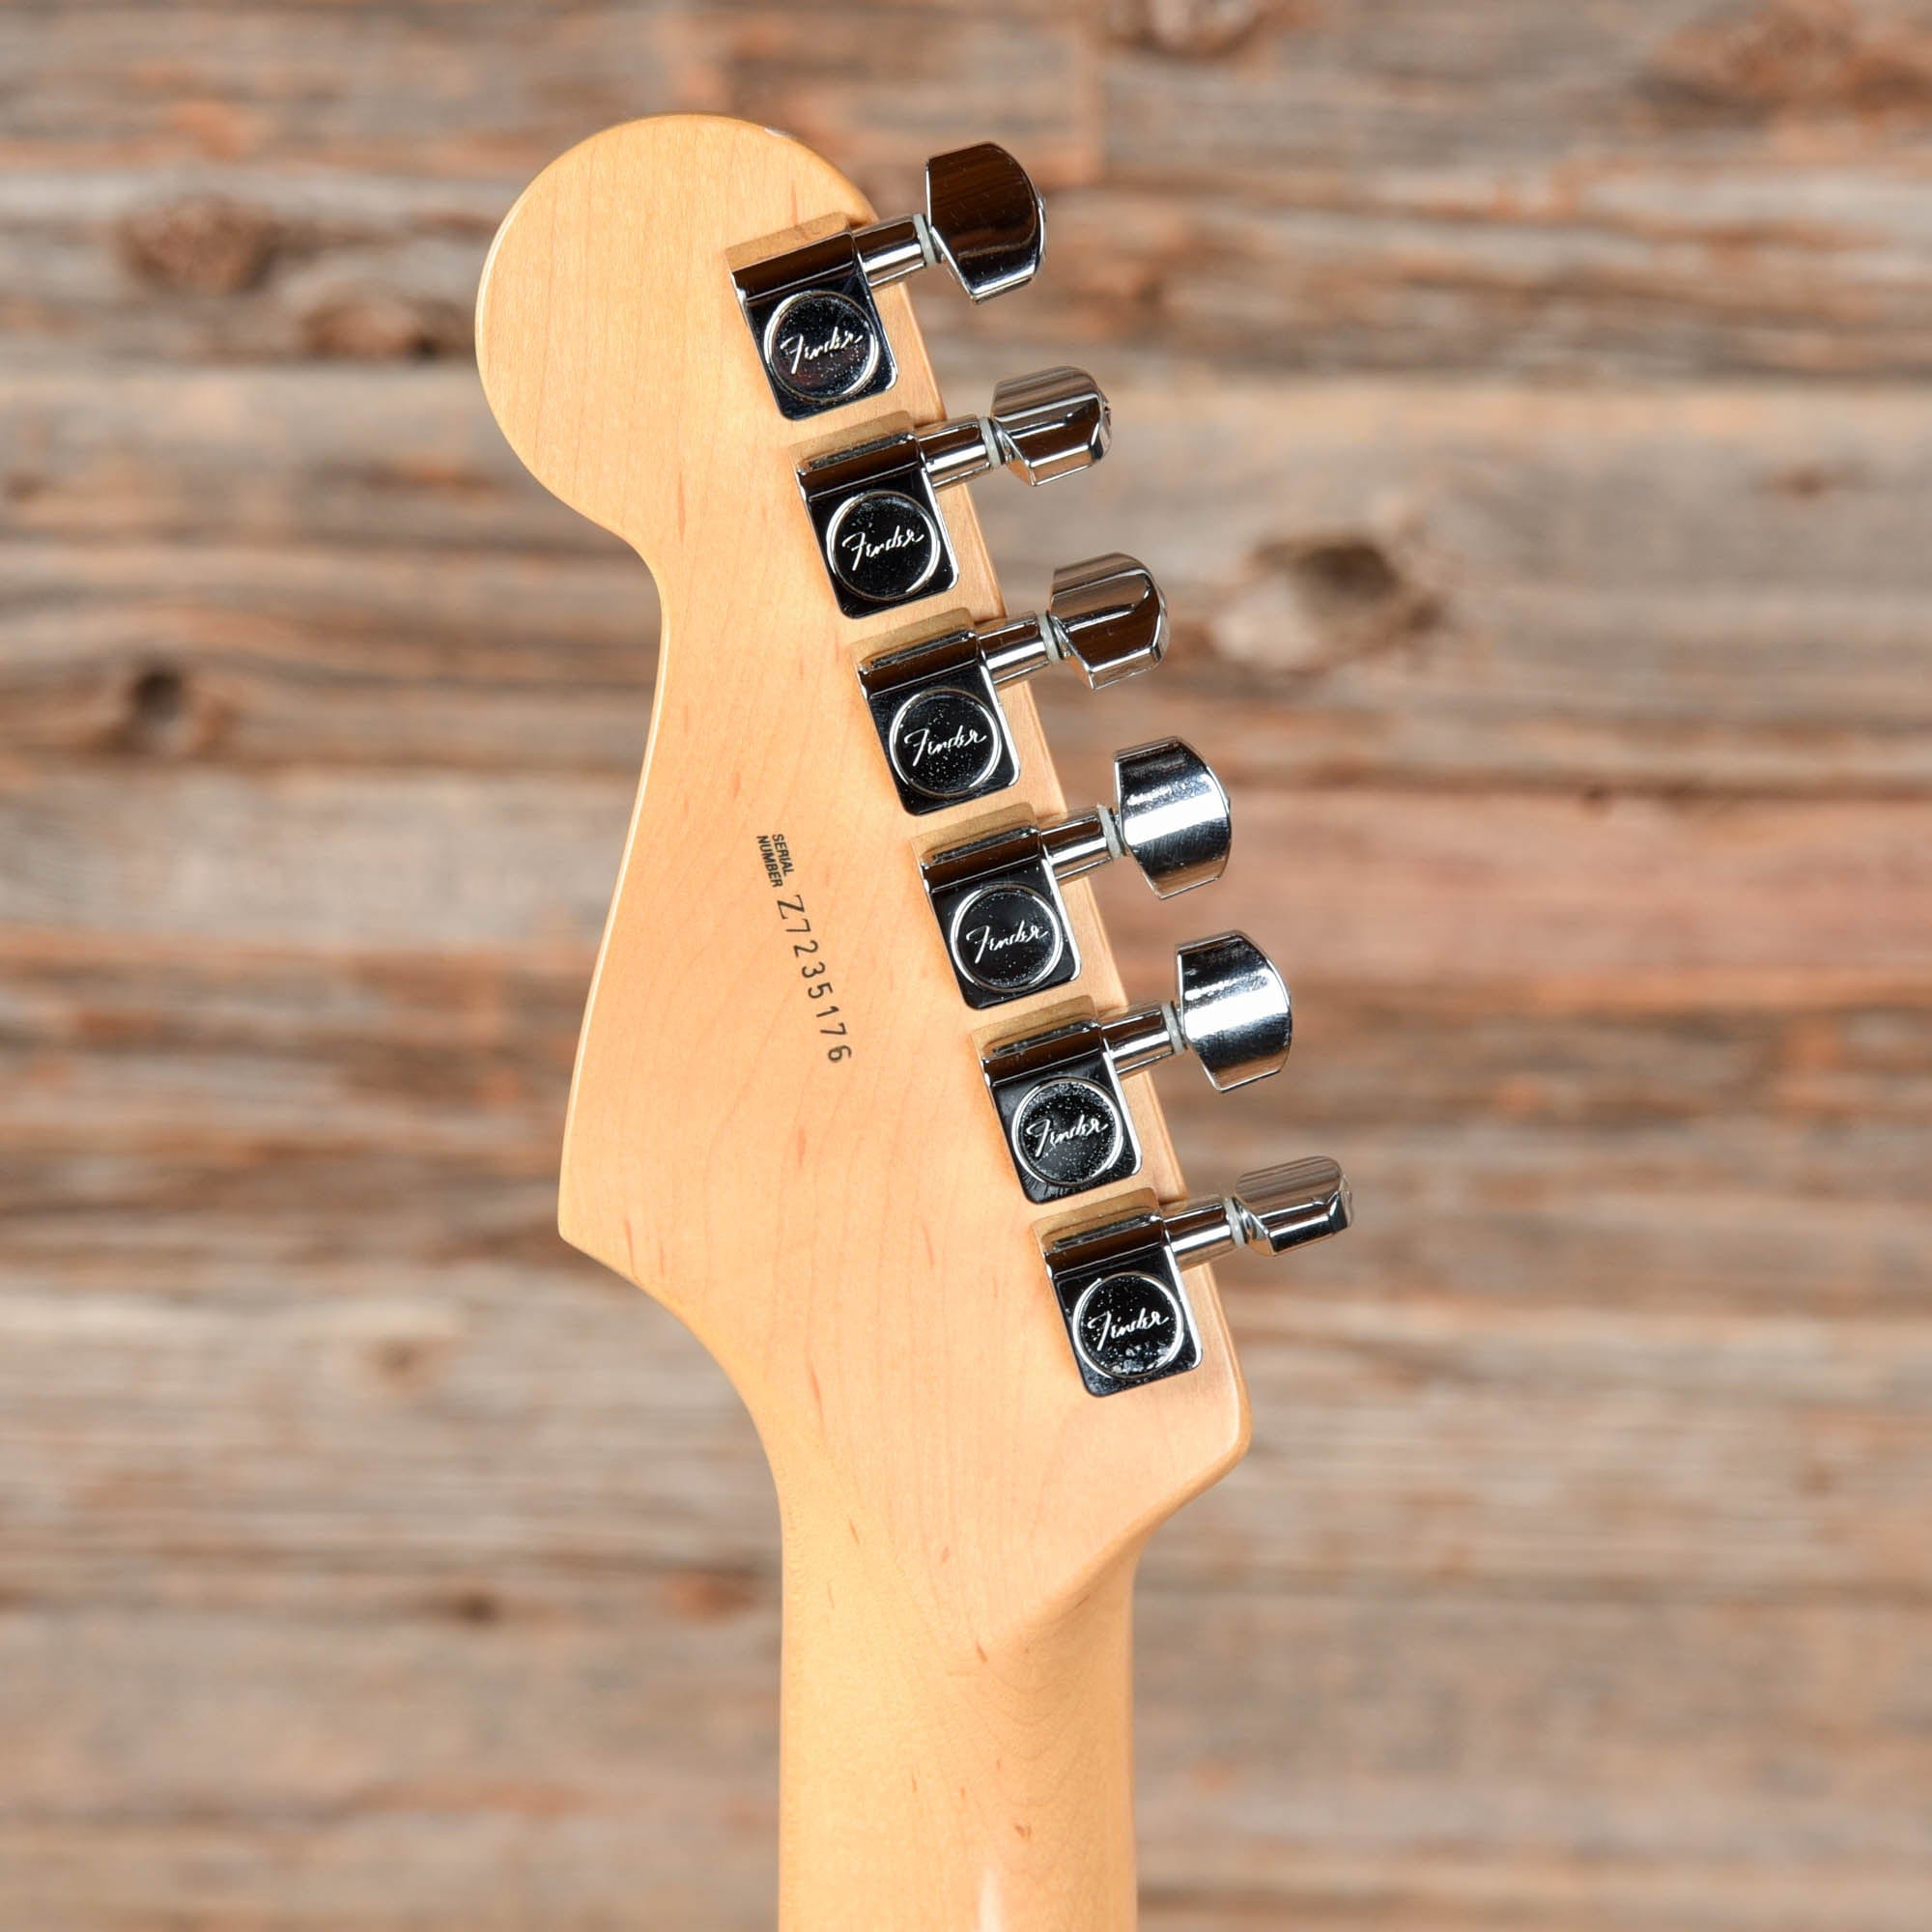 Fender American Standard Stratocaster HSS Sienna Sunburst 2008 Electric Guitars / Solid Body